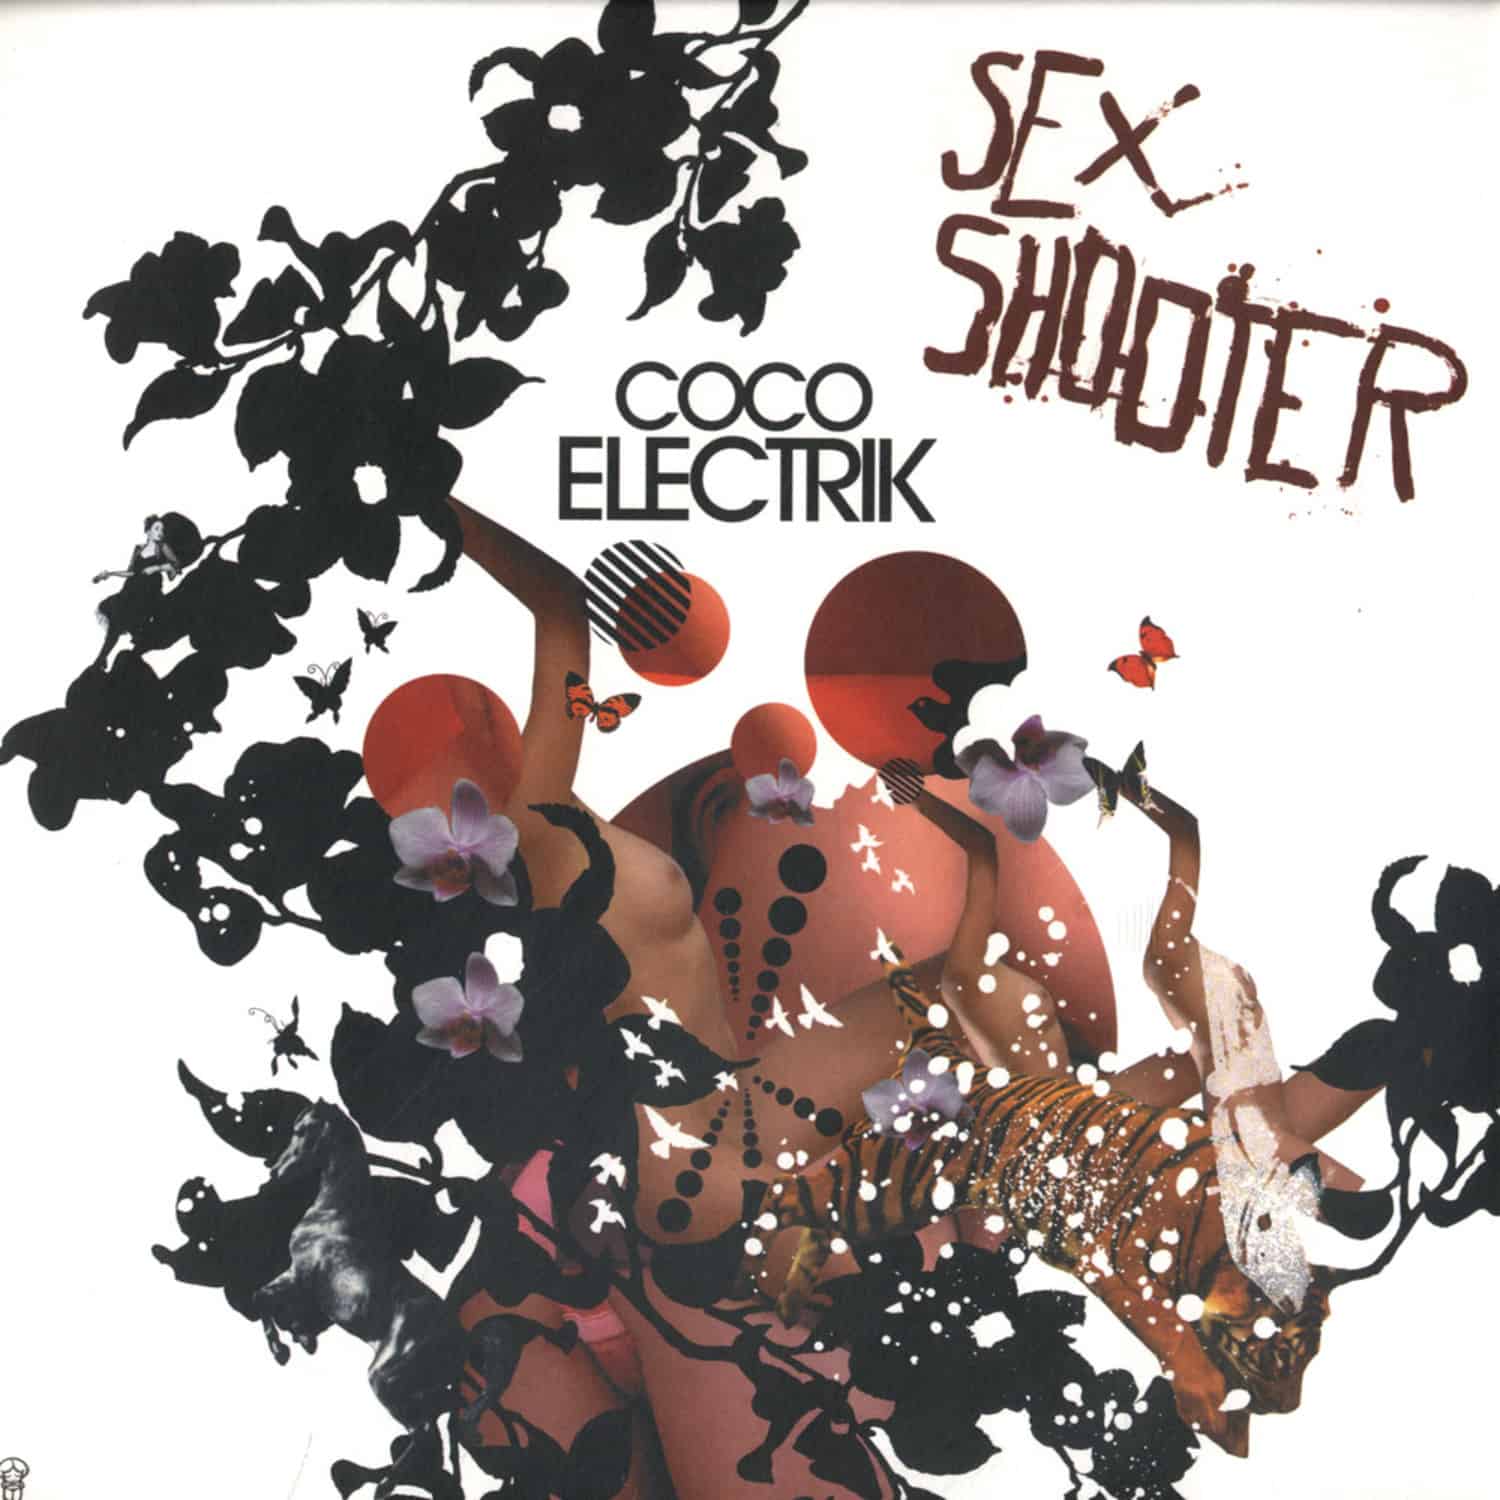 Coco Electrik - SEX SHOOTER